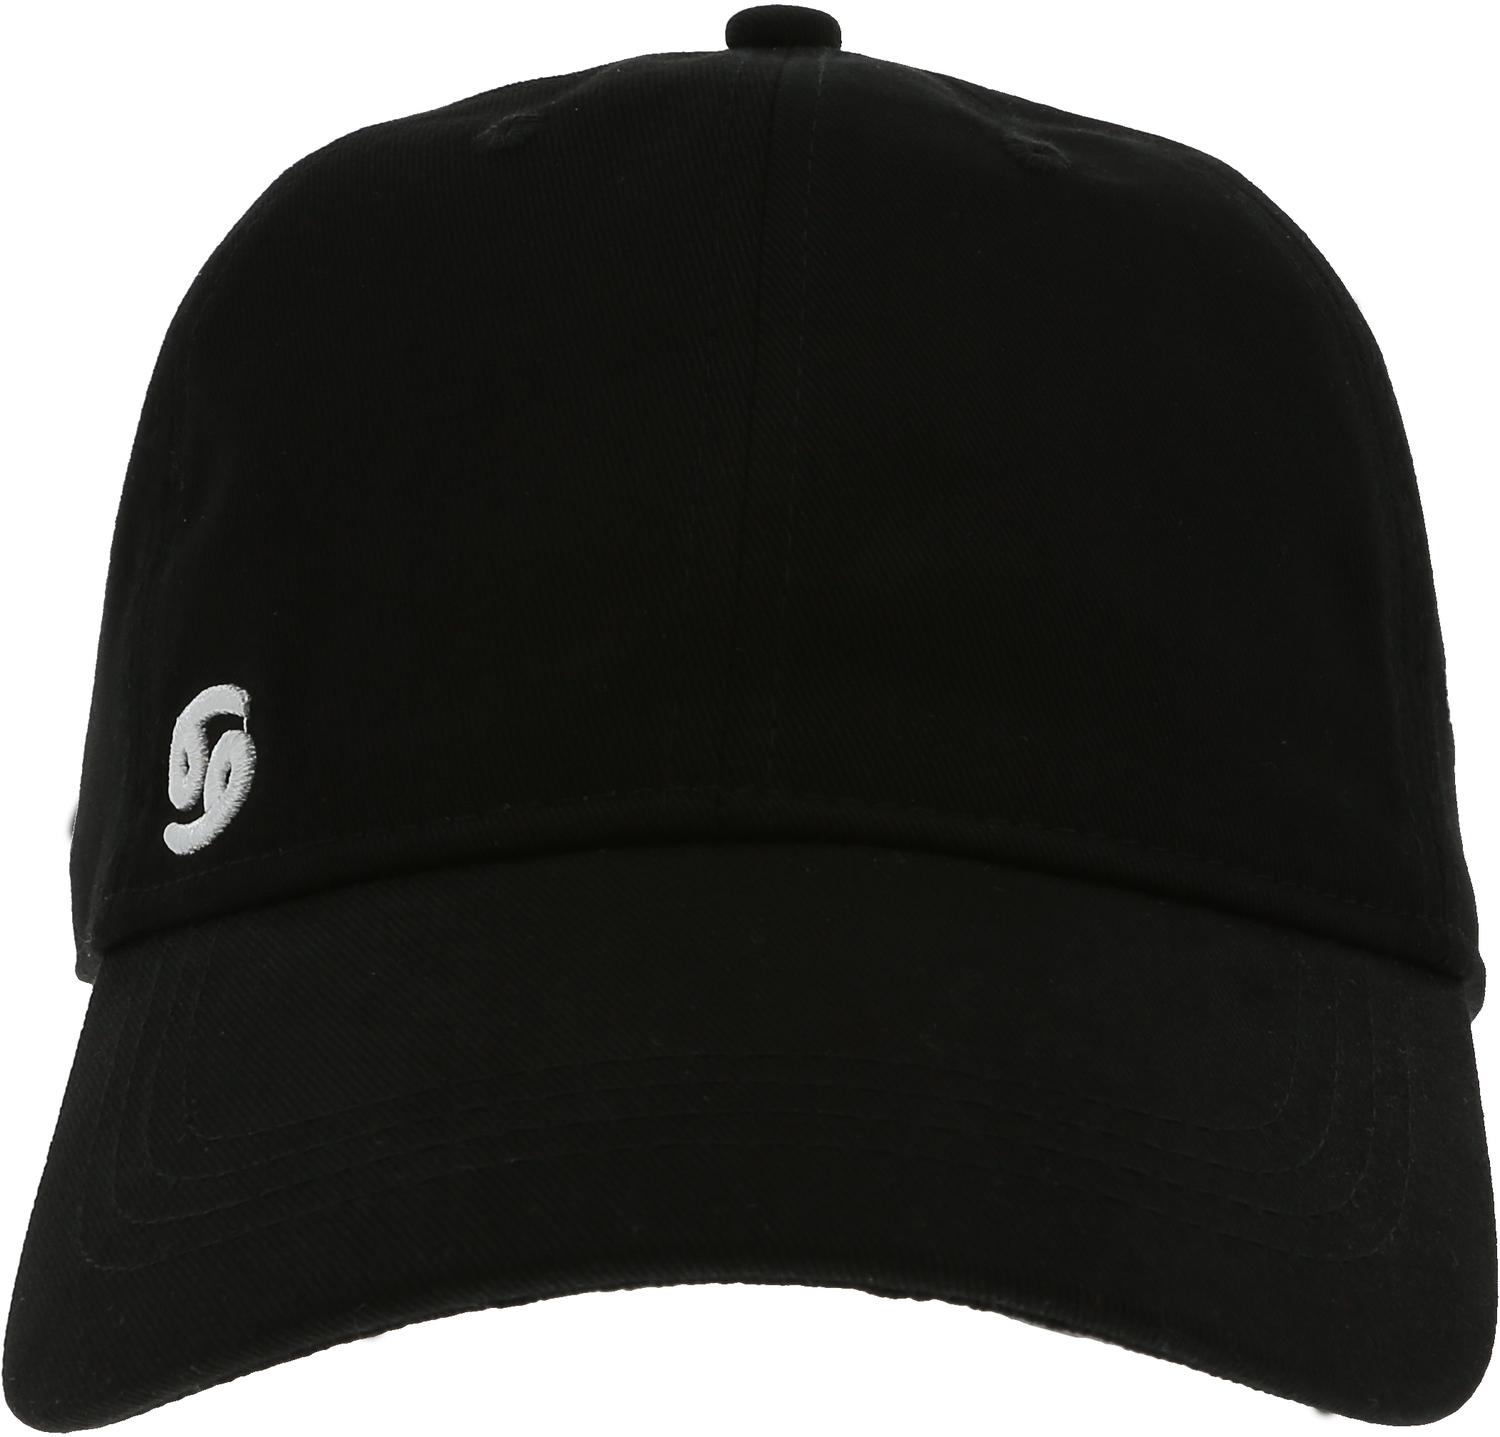 Cancer by You Are a Gem - Cancer - Black Adjustable Hat